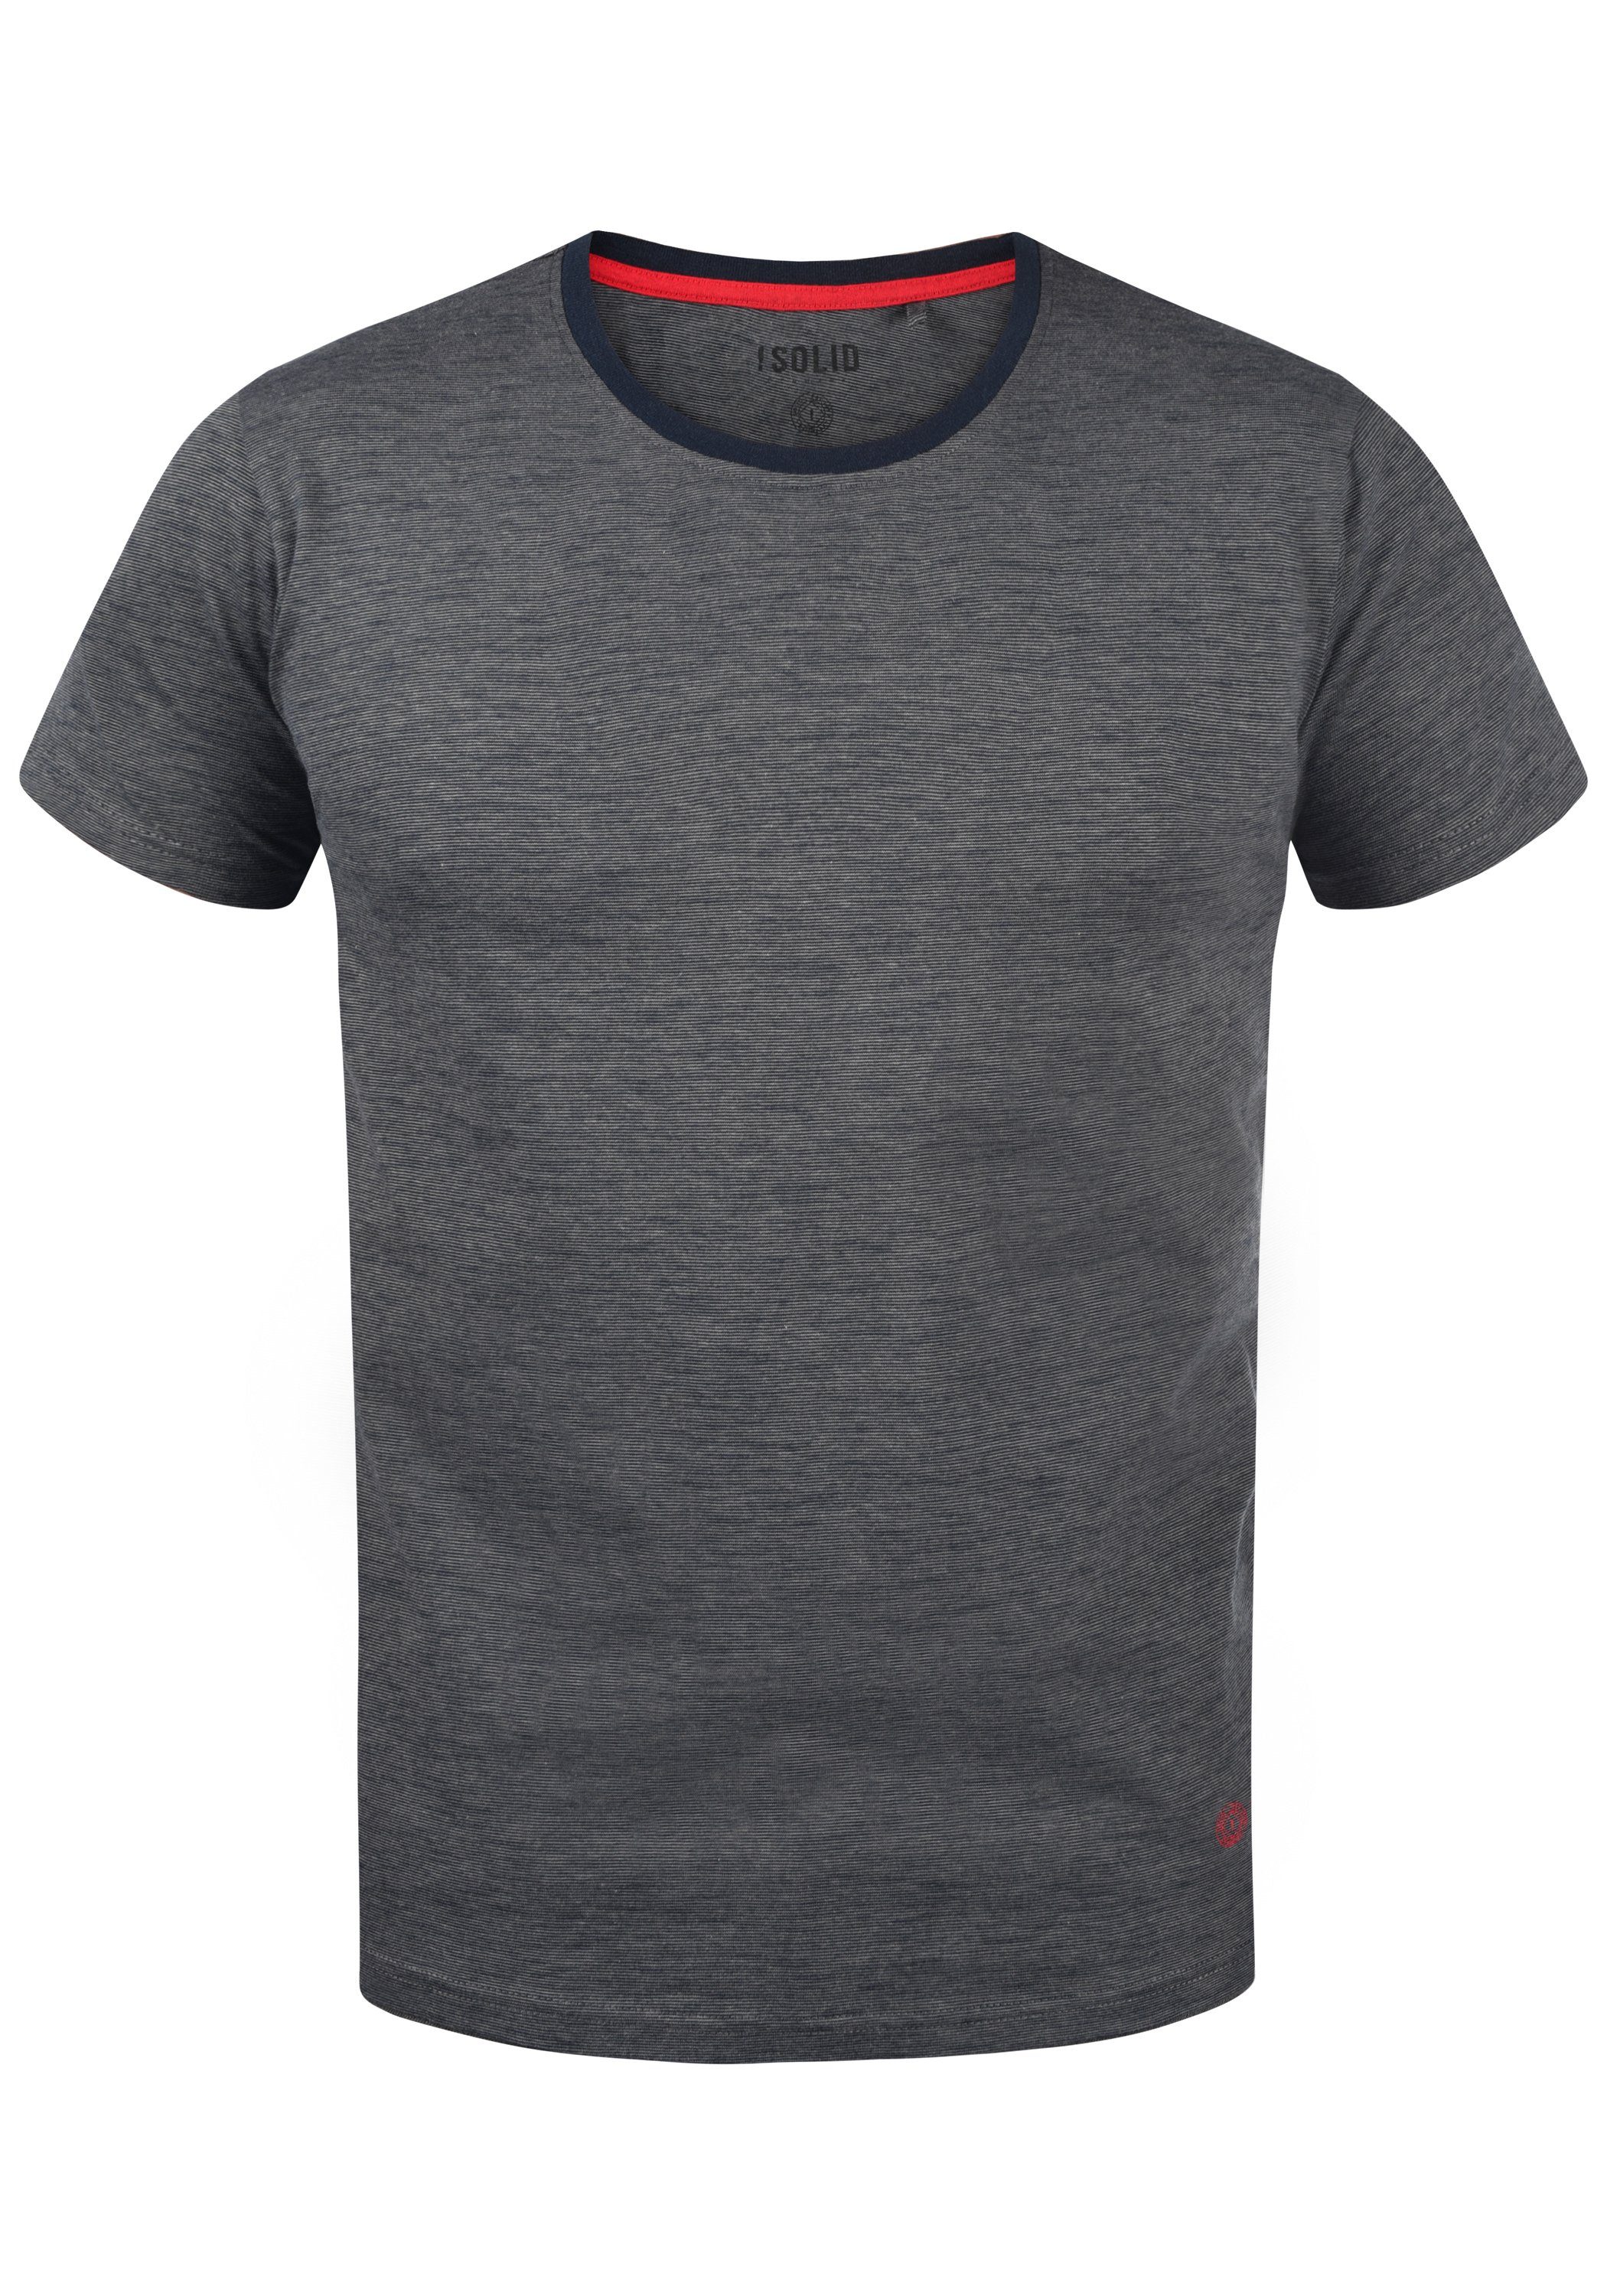 Solid T-Shirt SDNed Insignia T-Shirt (8991) in Melangelook Melange Blue